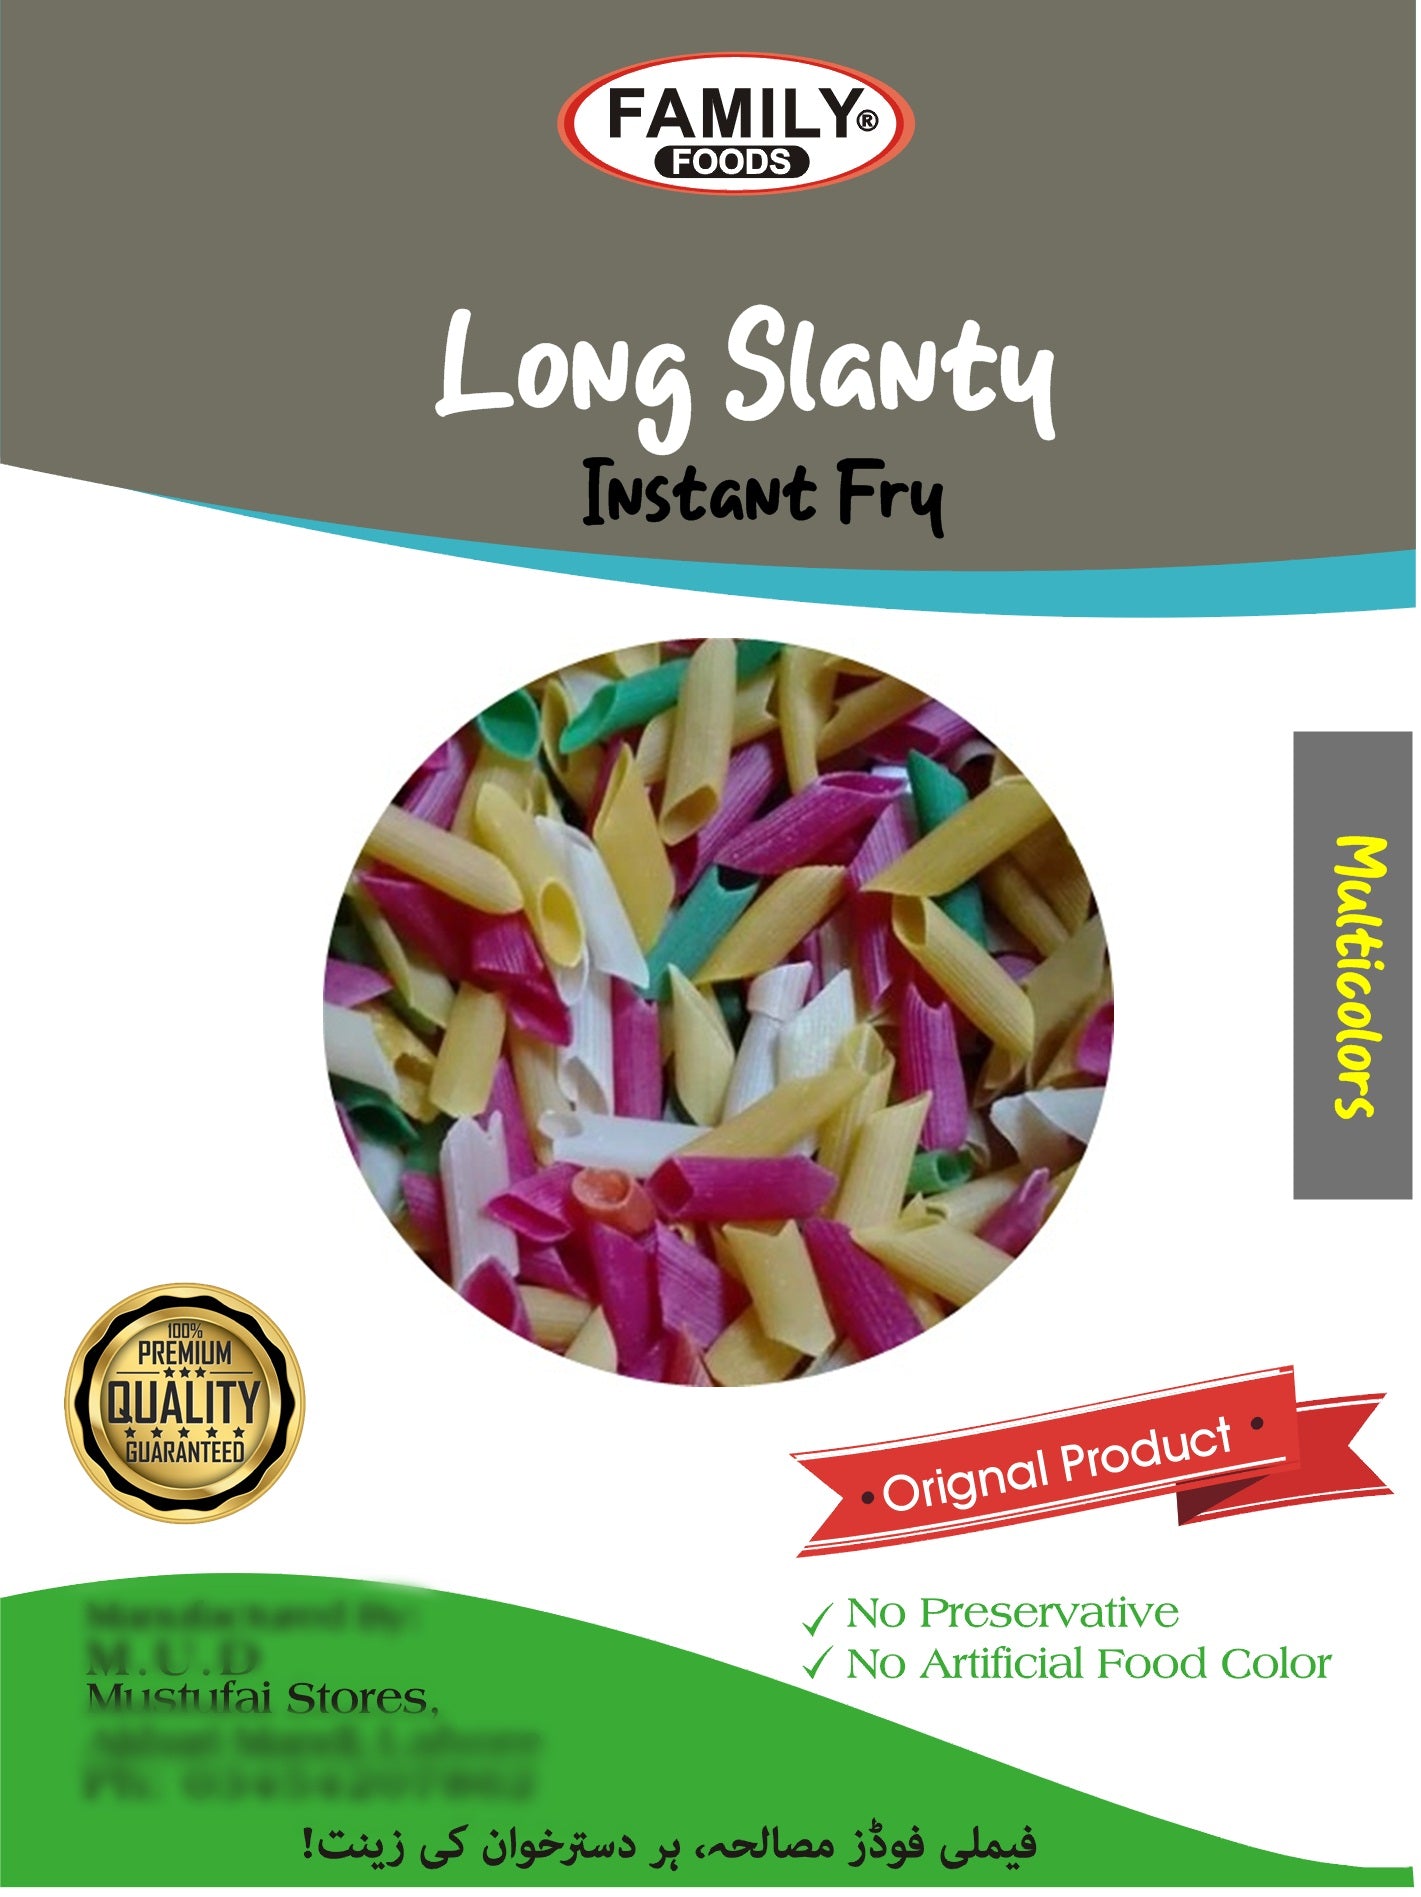 Long Slanty Crackers - Mix Color Snacks.